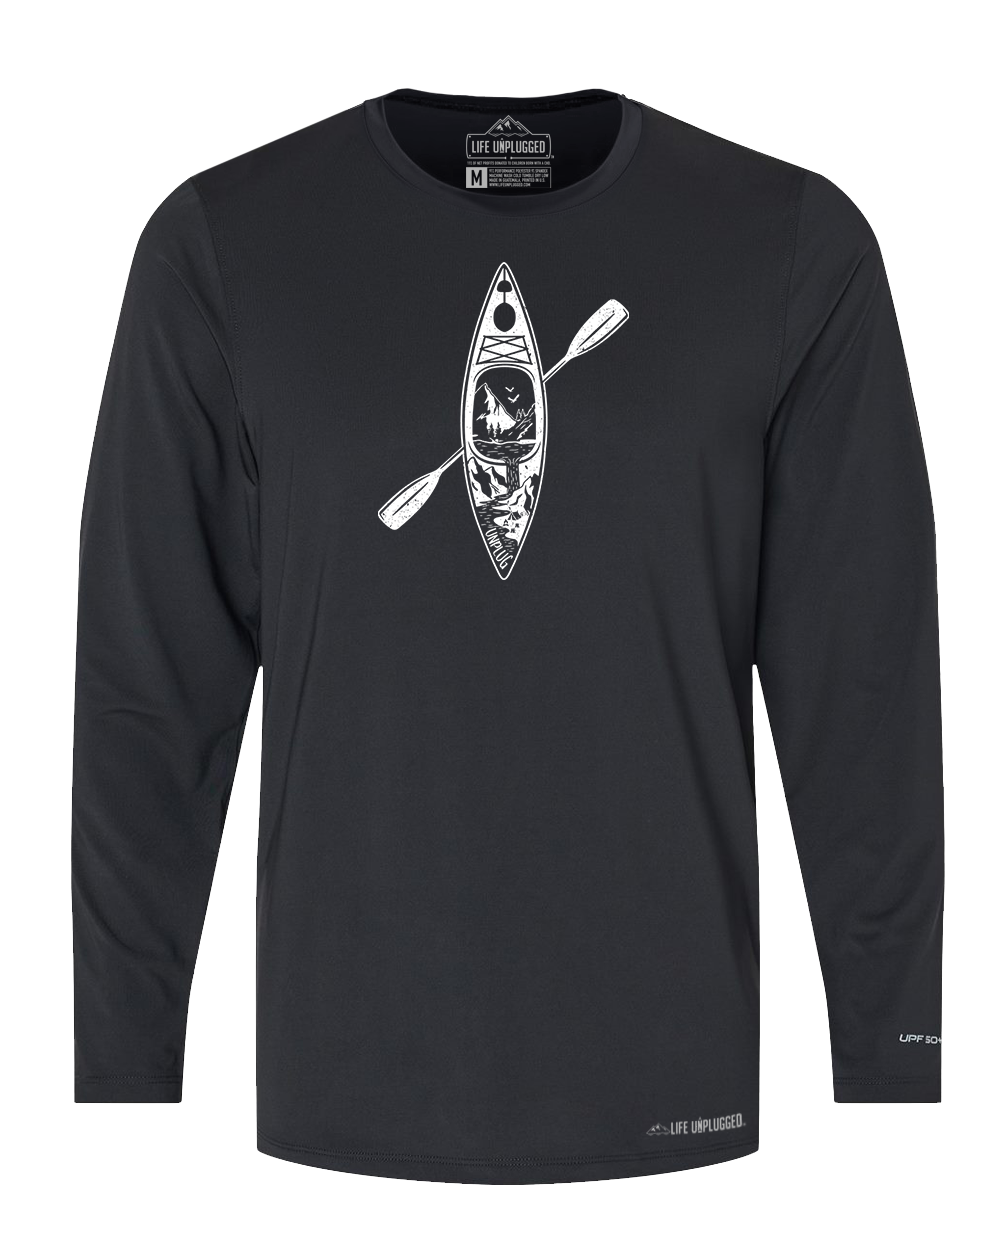 Kayak Fishing Long Sleeve T-shirt, 50+UPF Long Sleeve T-shirt